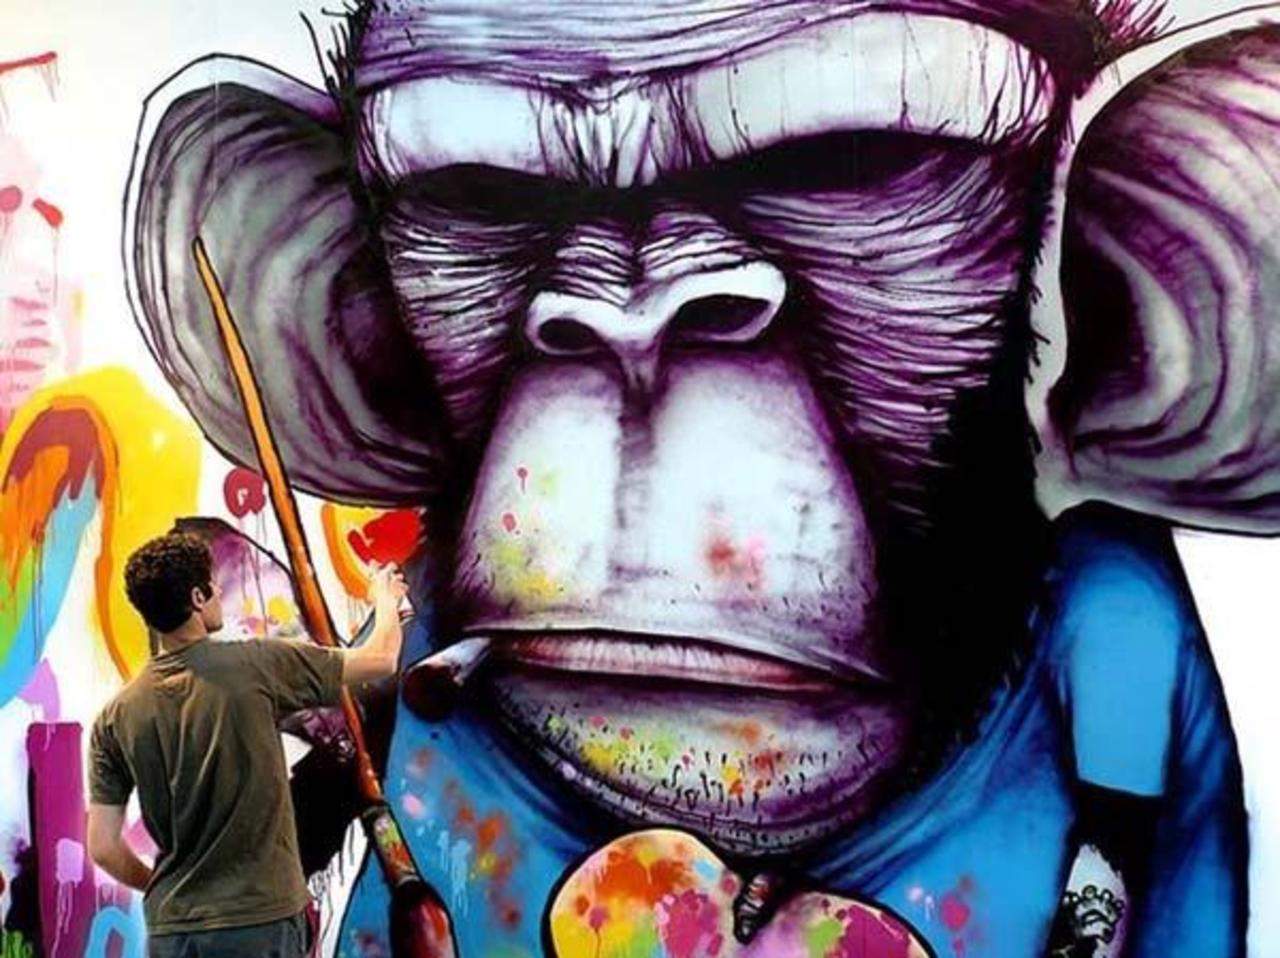 French artist Dran
#streetart #art #graffiti #mural http://t.co/5Y1uUyz3pE